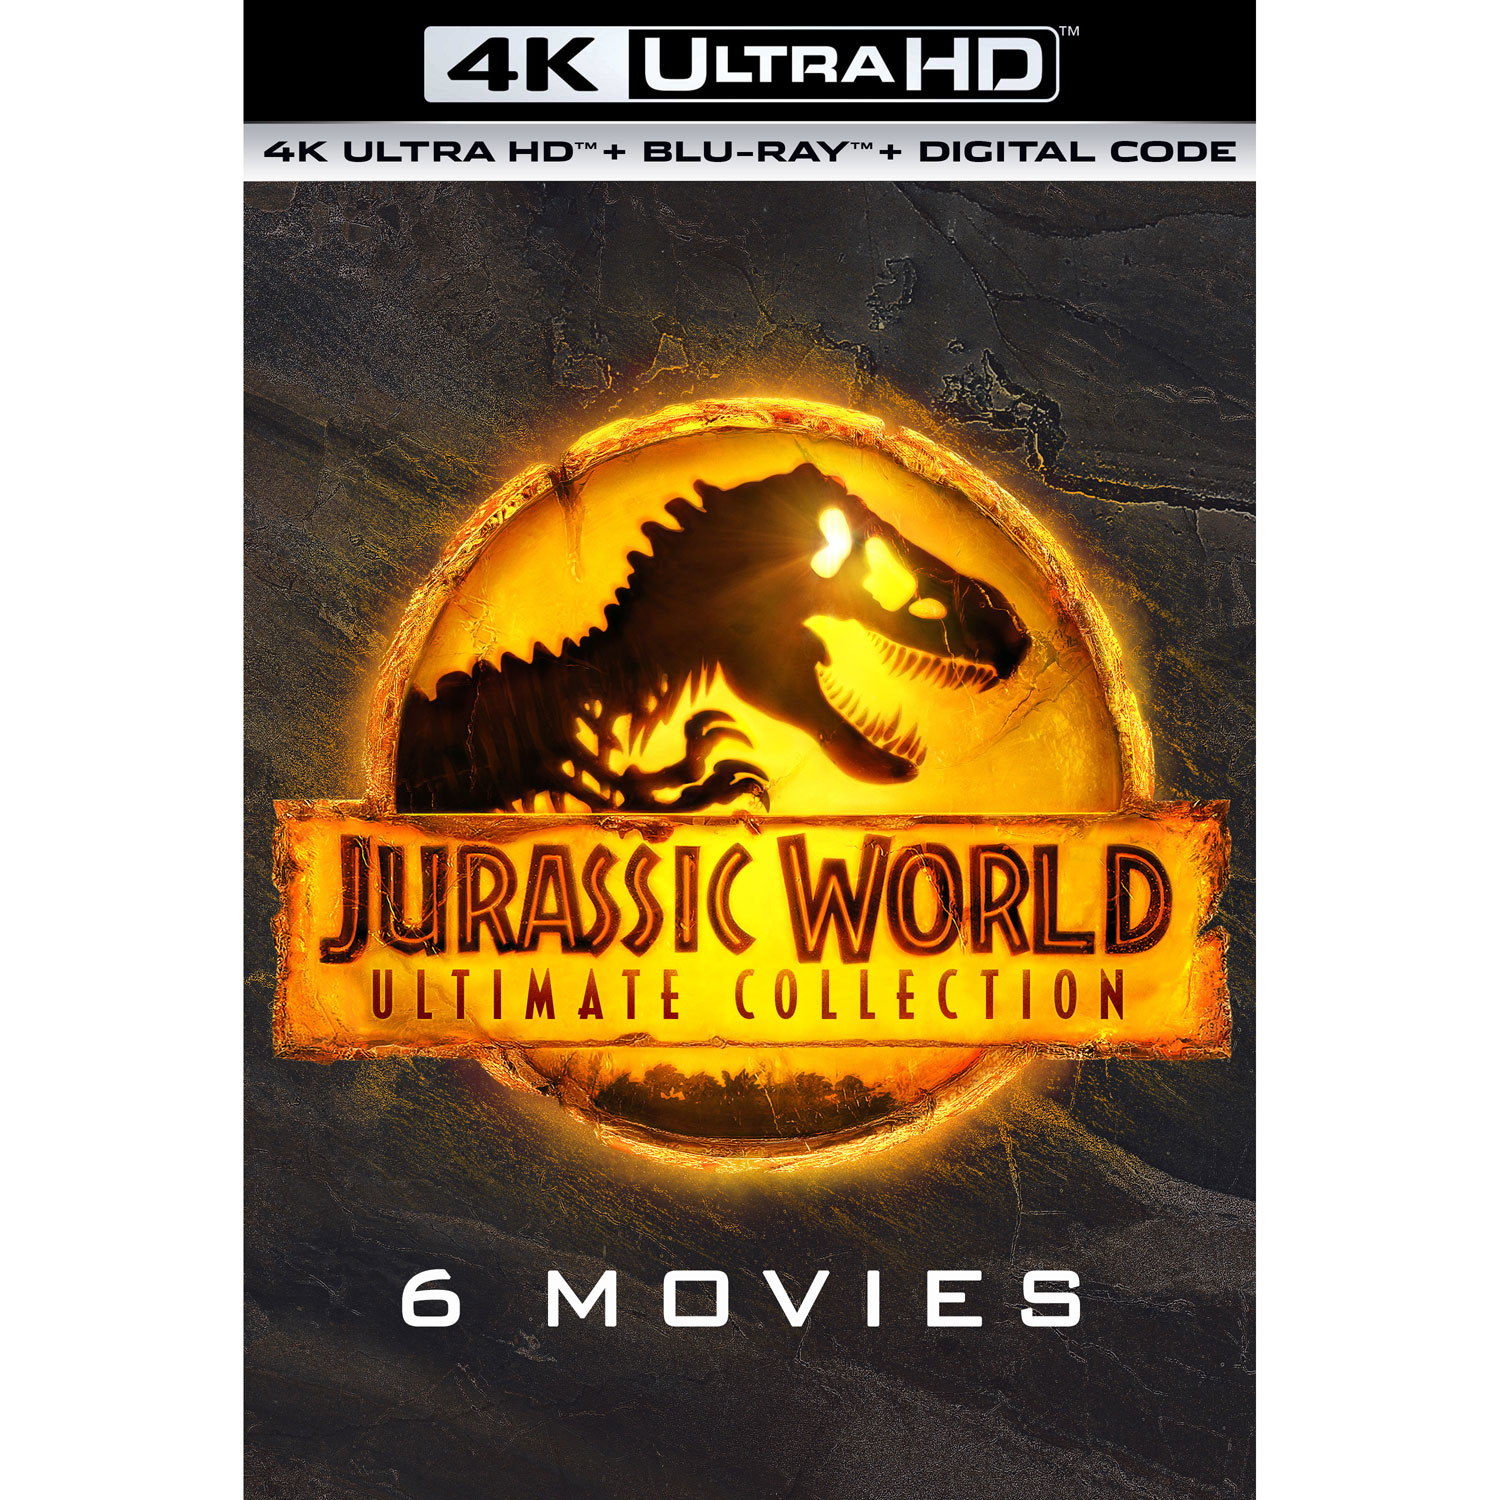 Jurassic World Ultimate Collection - 6 Movies (4K Ultra HD) (Blu-ray